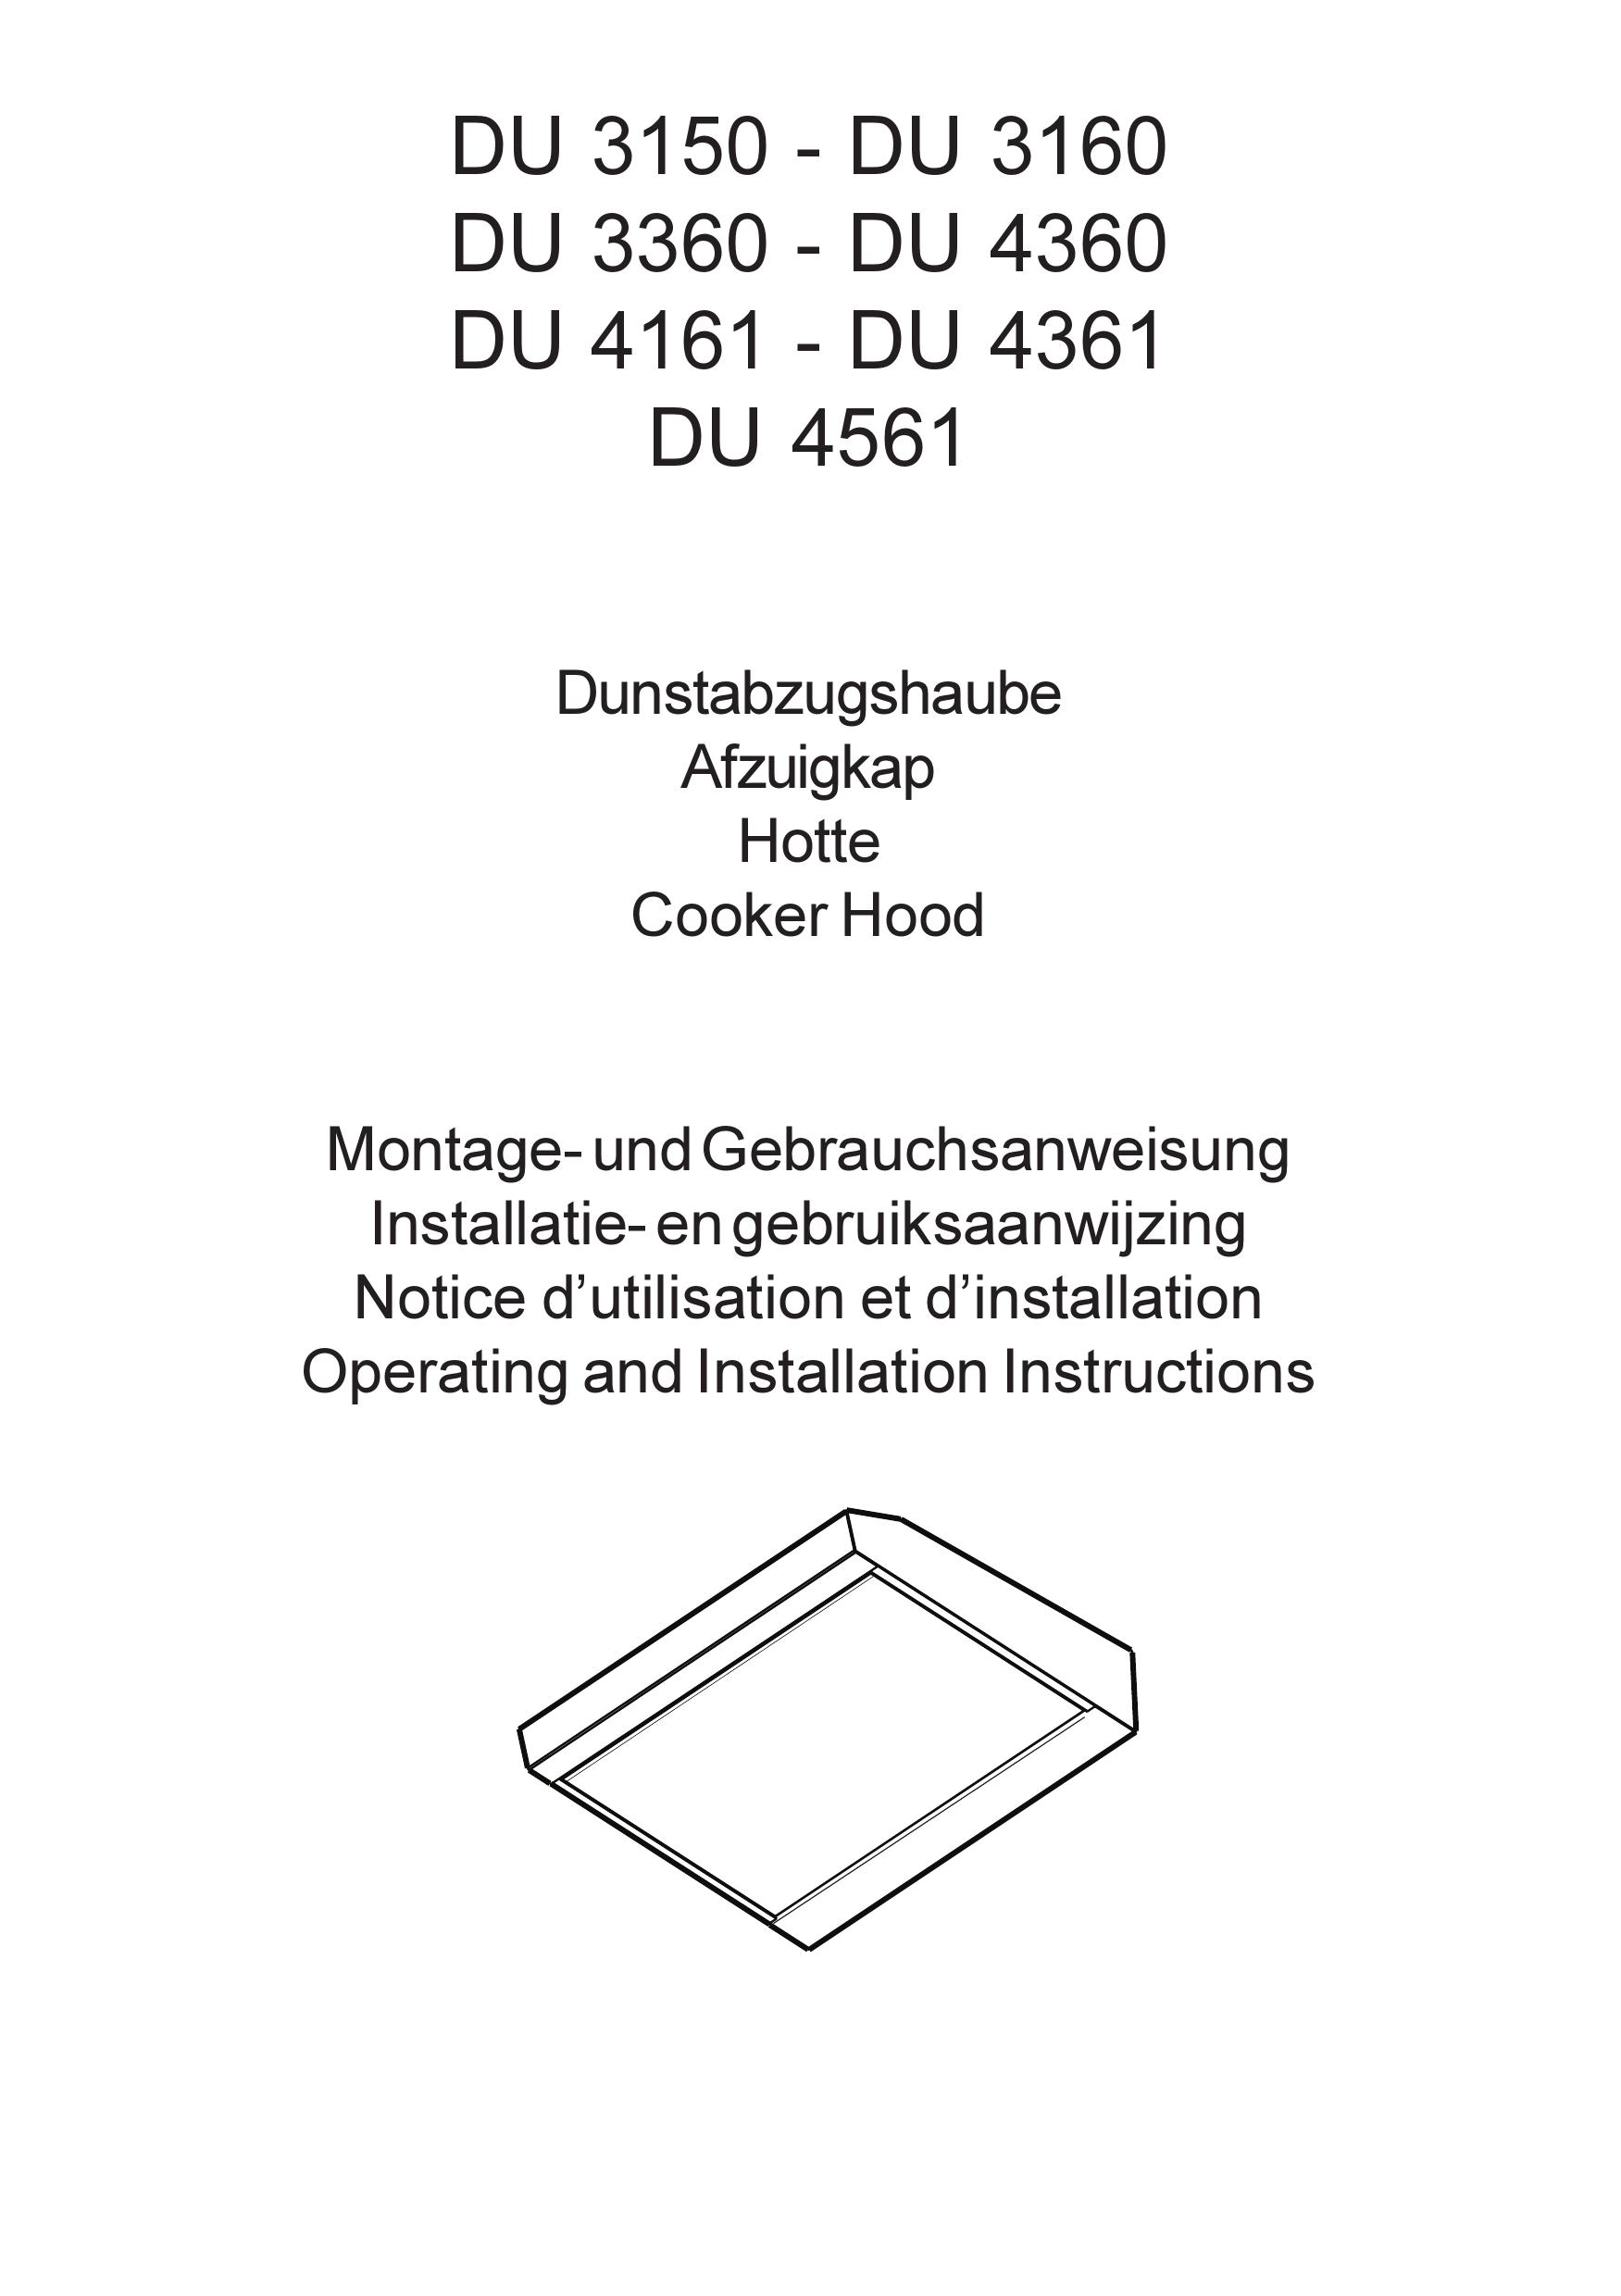 AEG DU 4561 Ventilation Hood User Manual